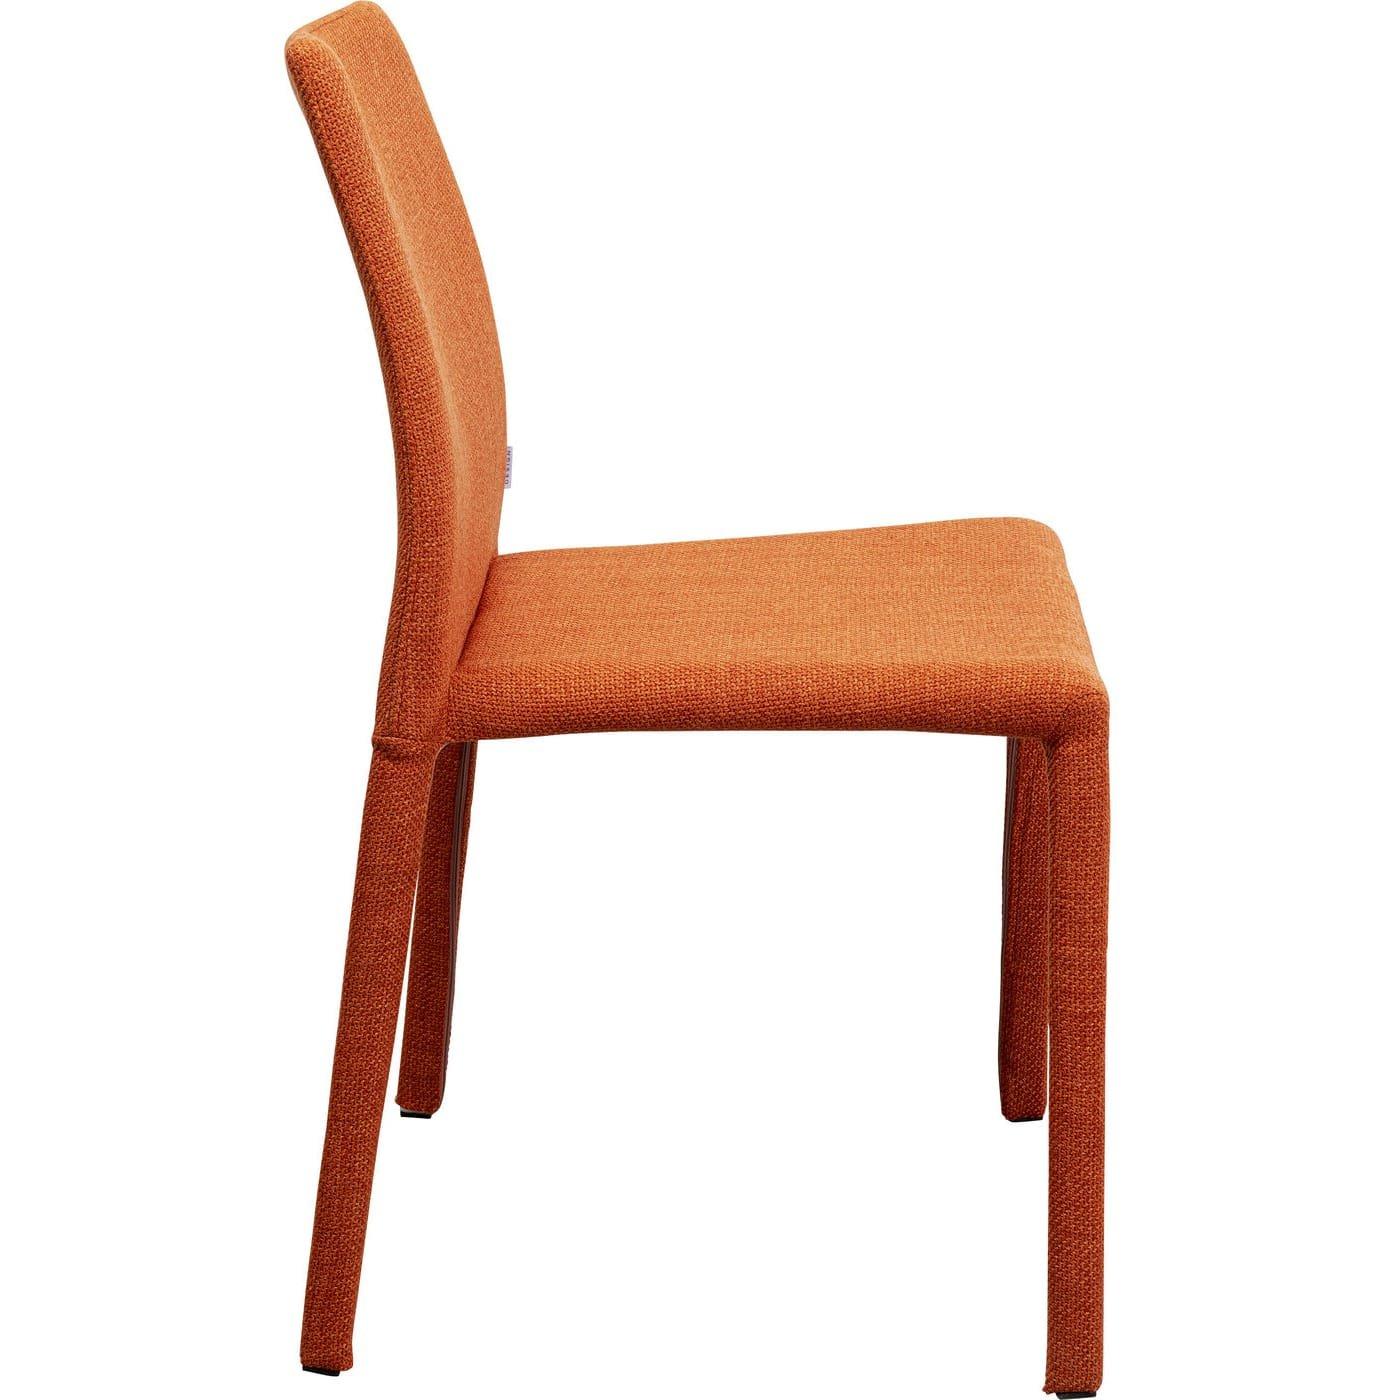 KARE Design Chaise Bologne orange  